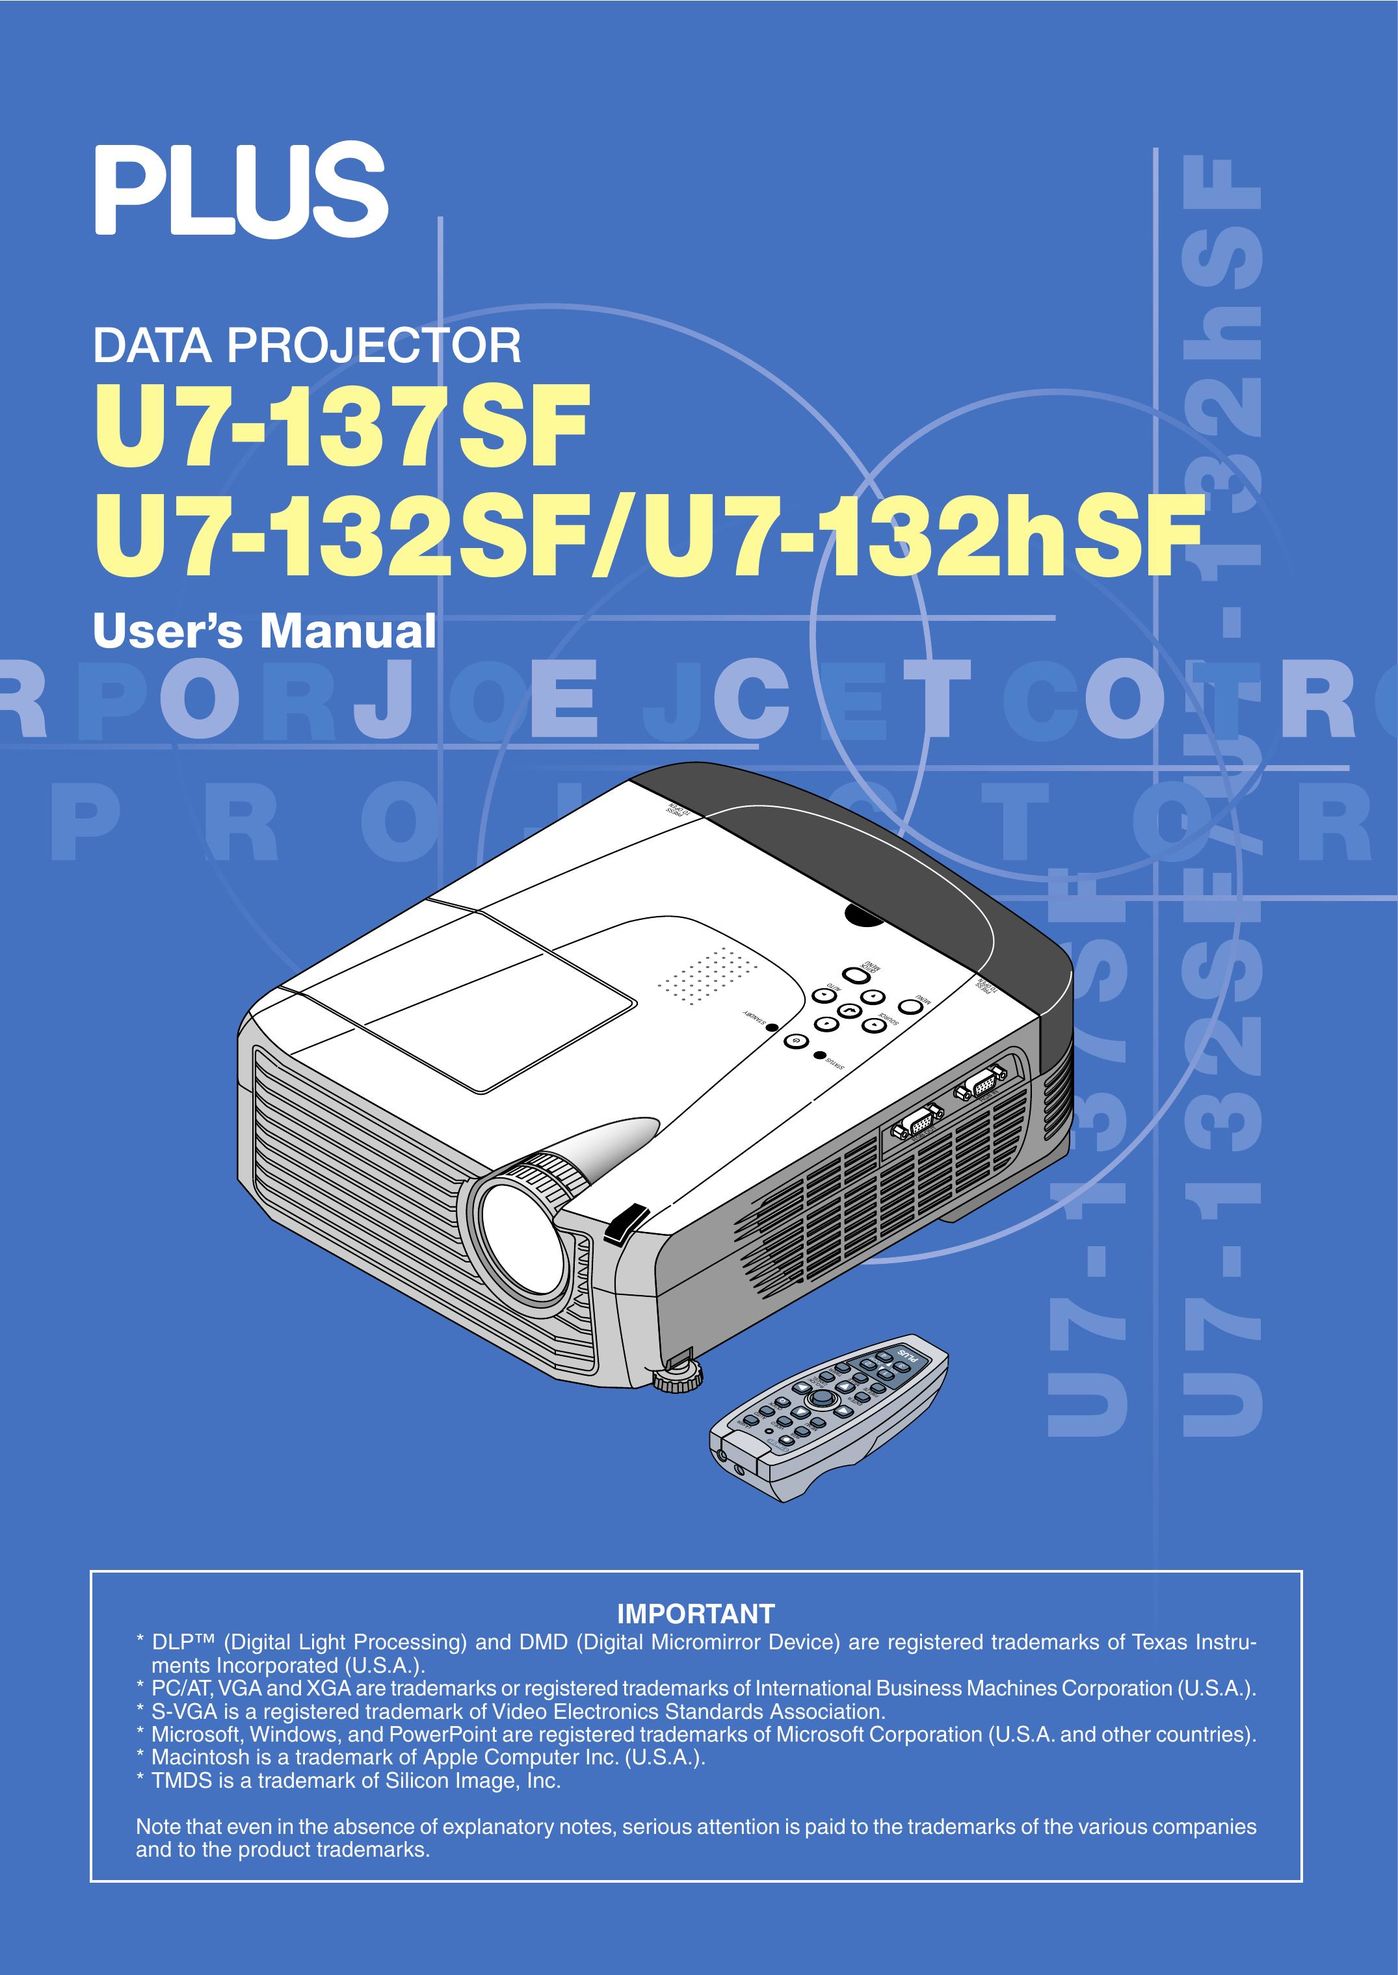 PLUS Vision U7-132HSF Projector User Manual